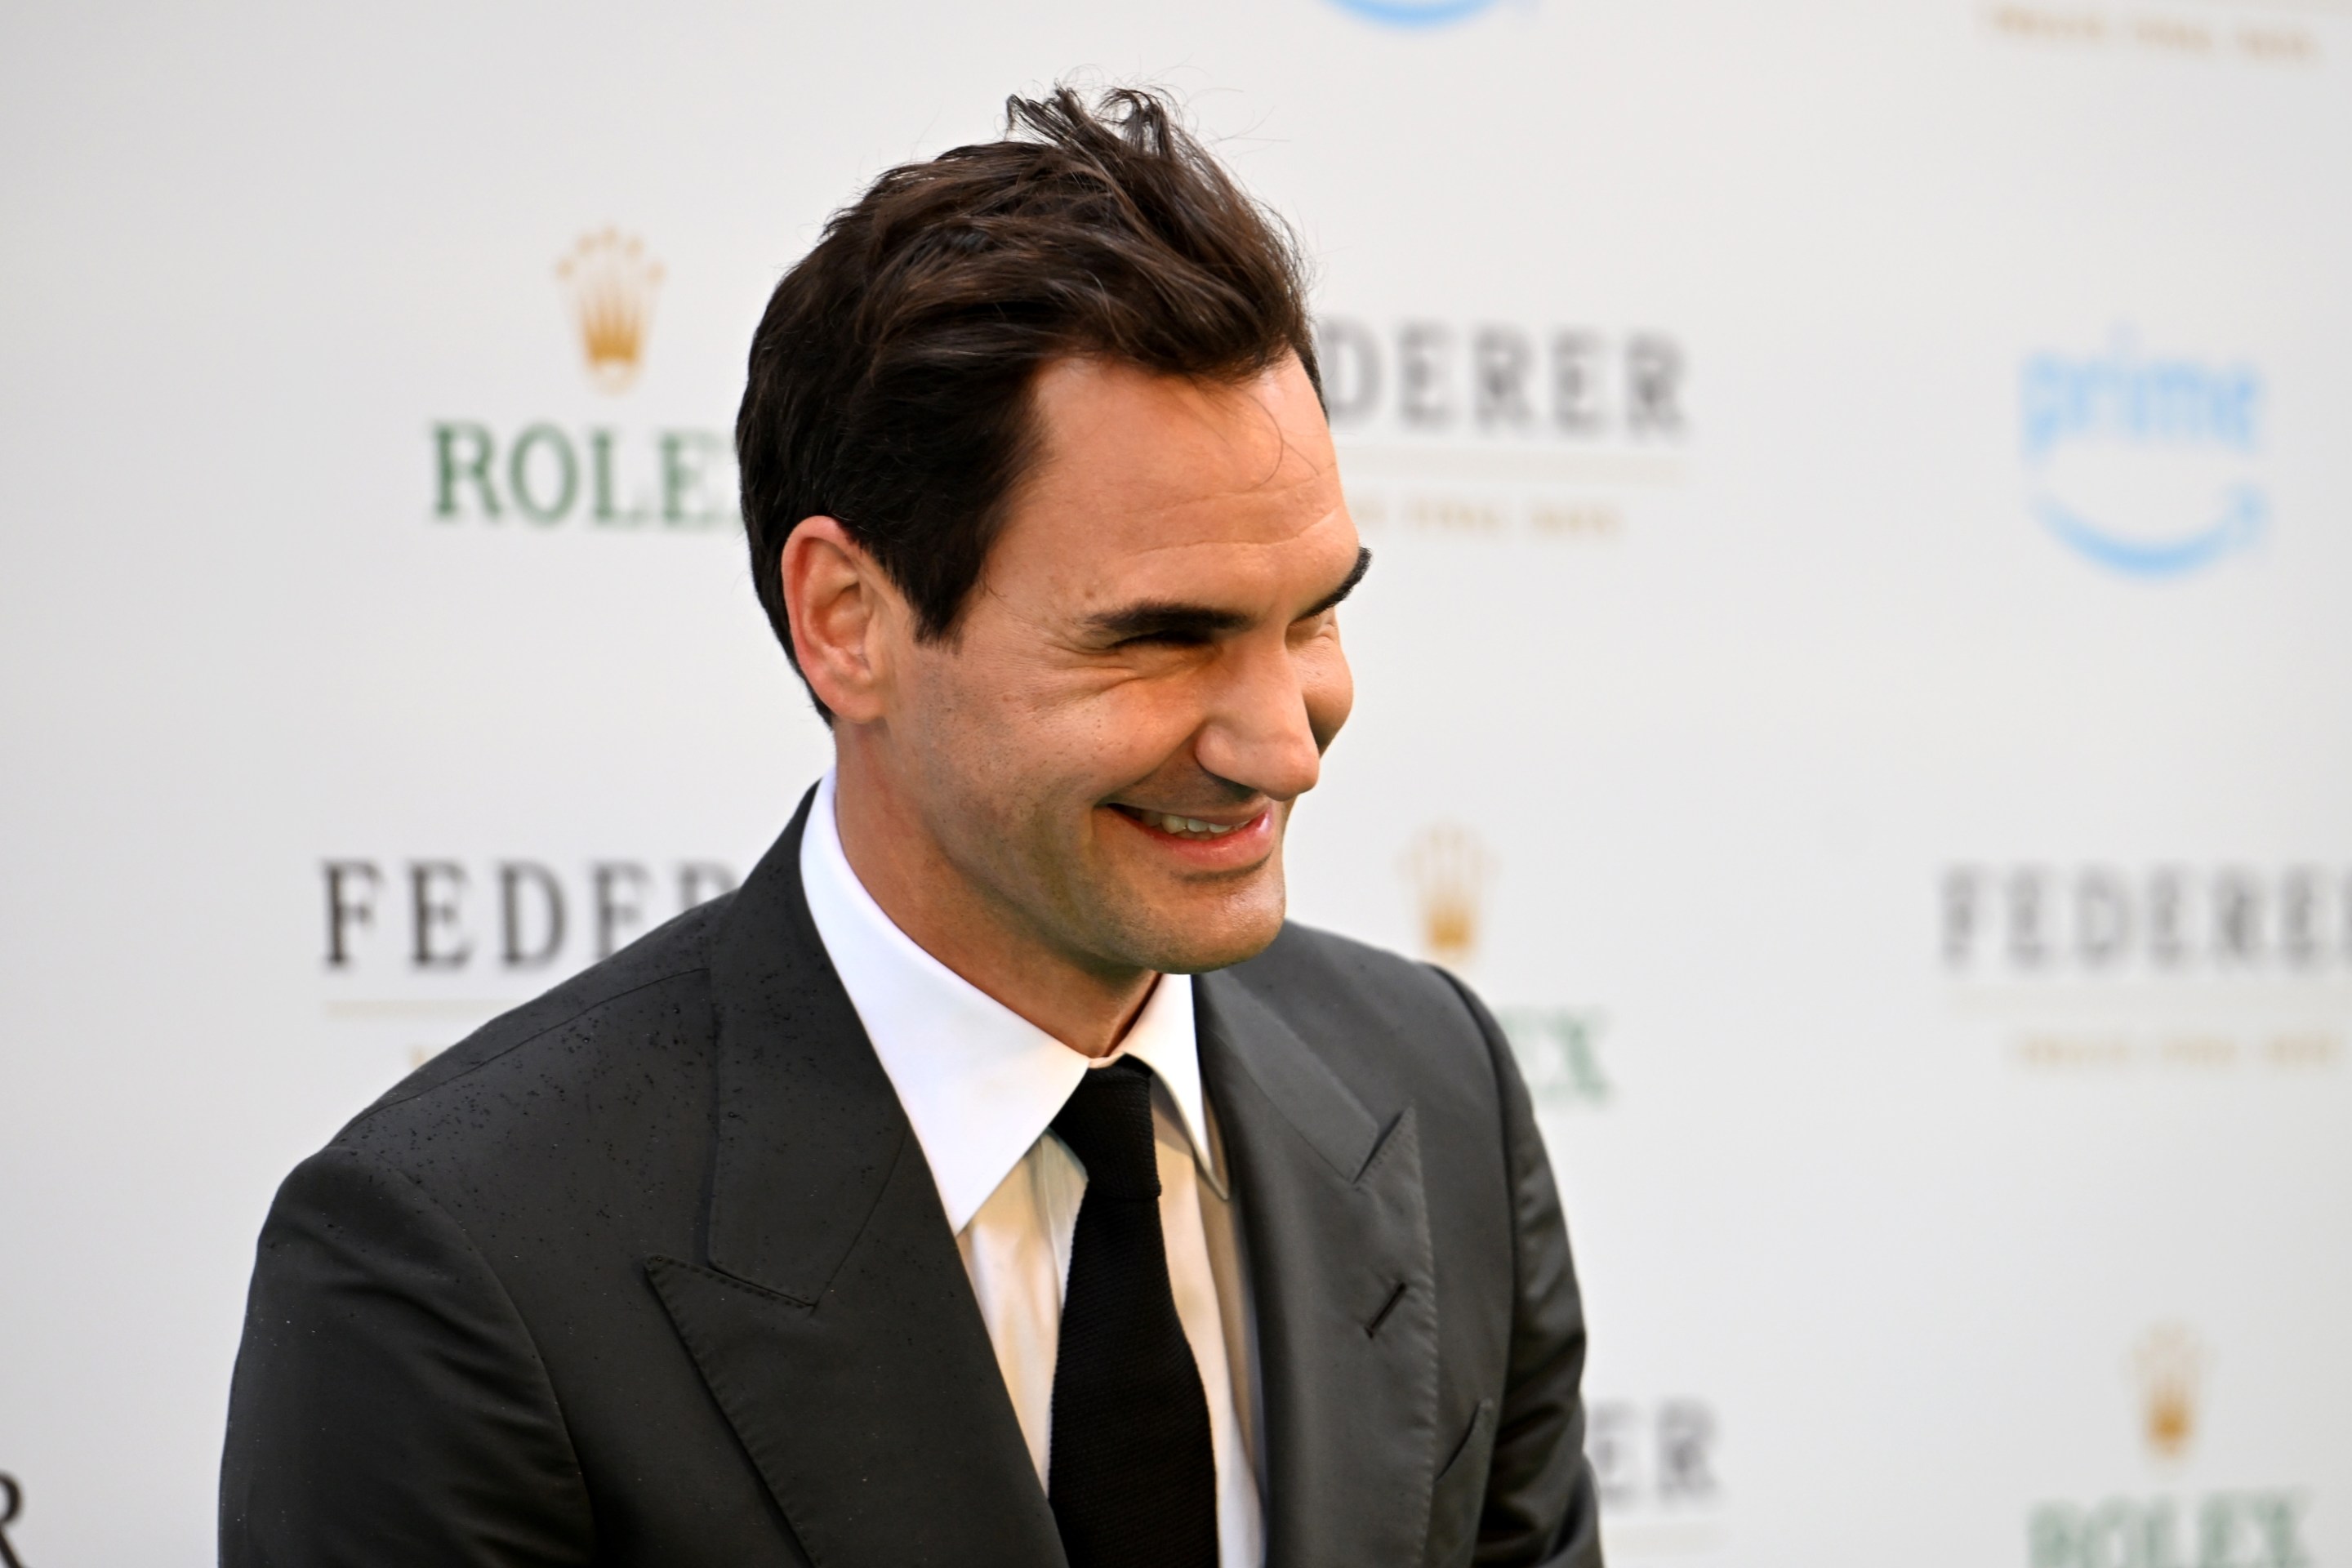 Roger Federer poses for photos